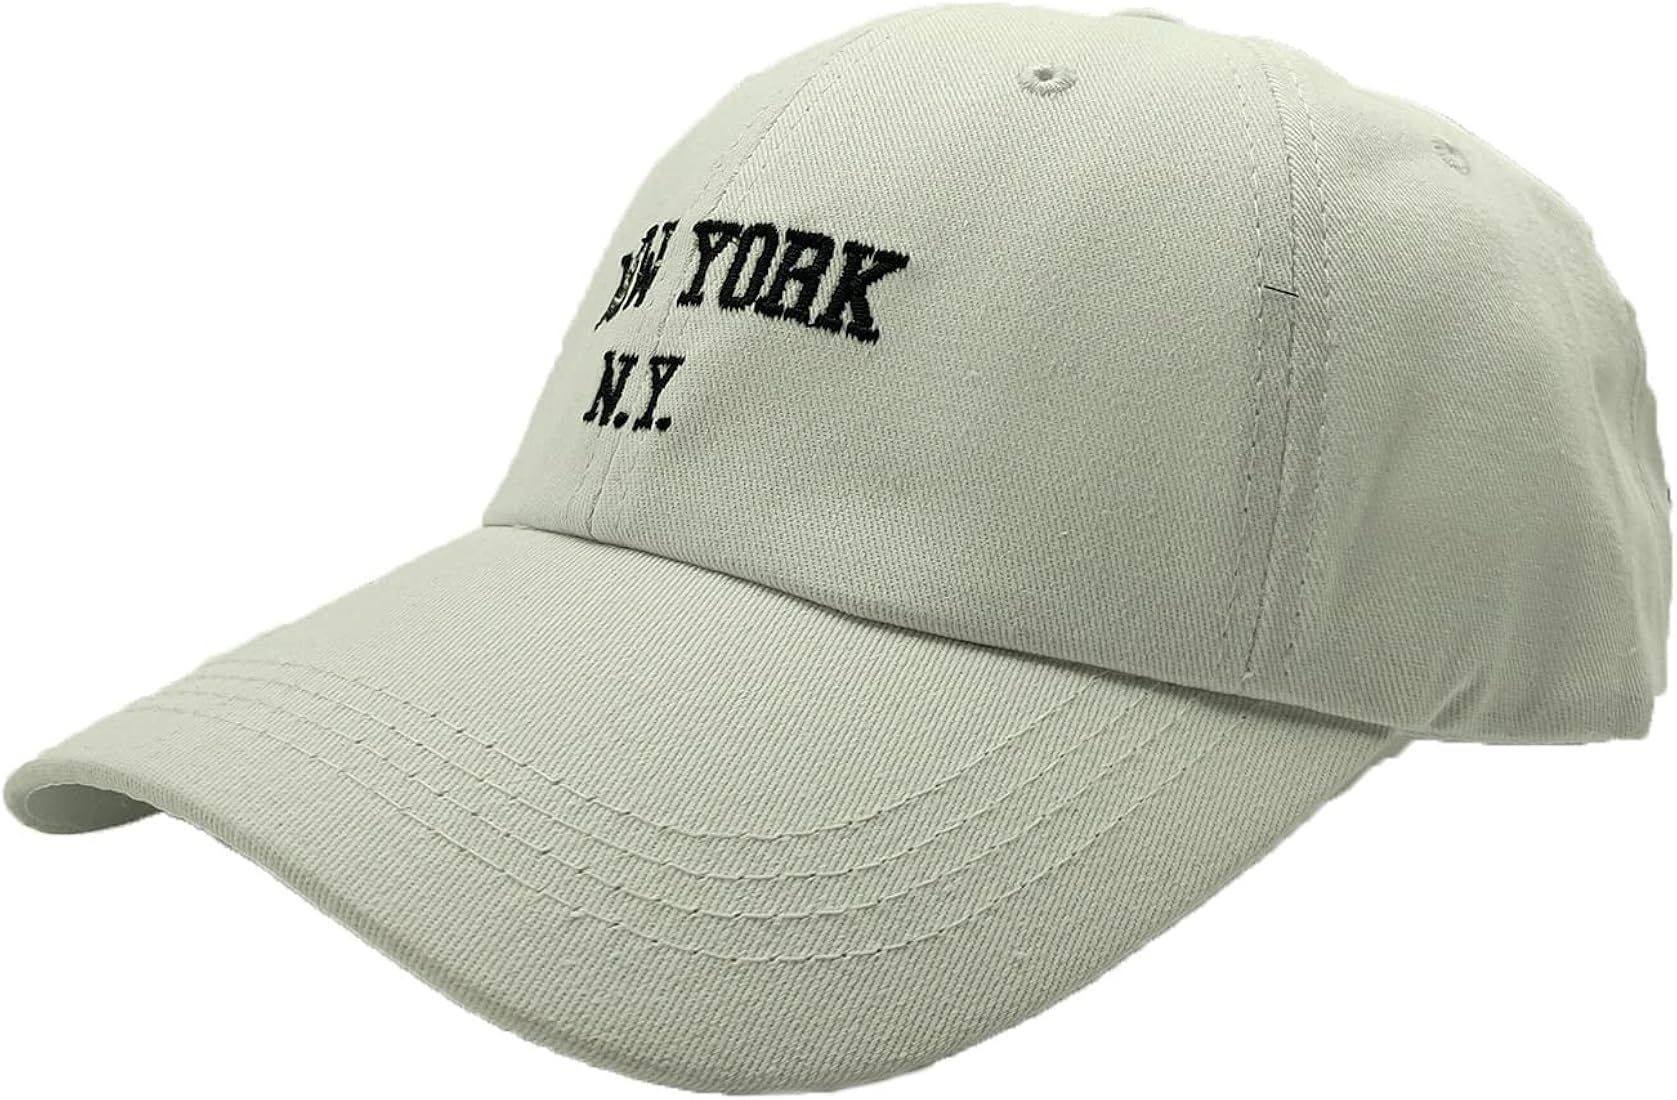 New York Cotton Baseball Cap Unisex Adjustable Washed Distressed Snapback Hat Vintage Classic Dad Ha | Amazon (US)